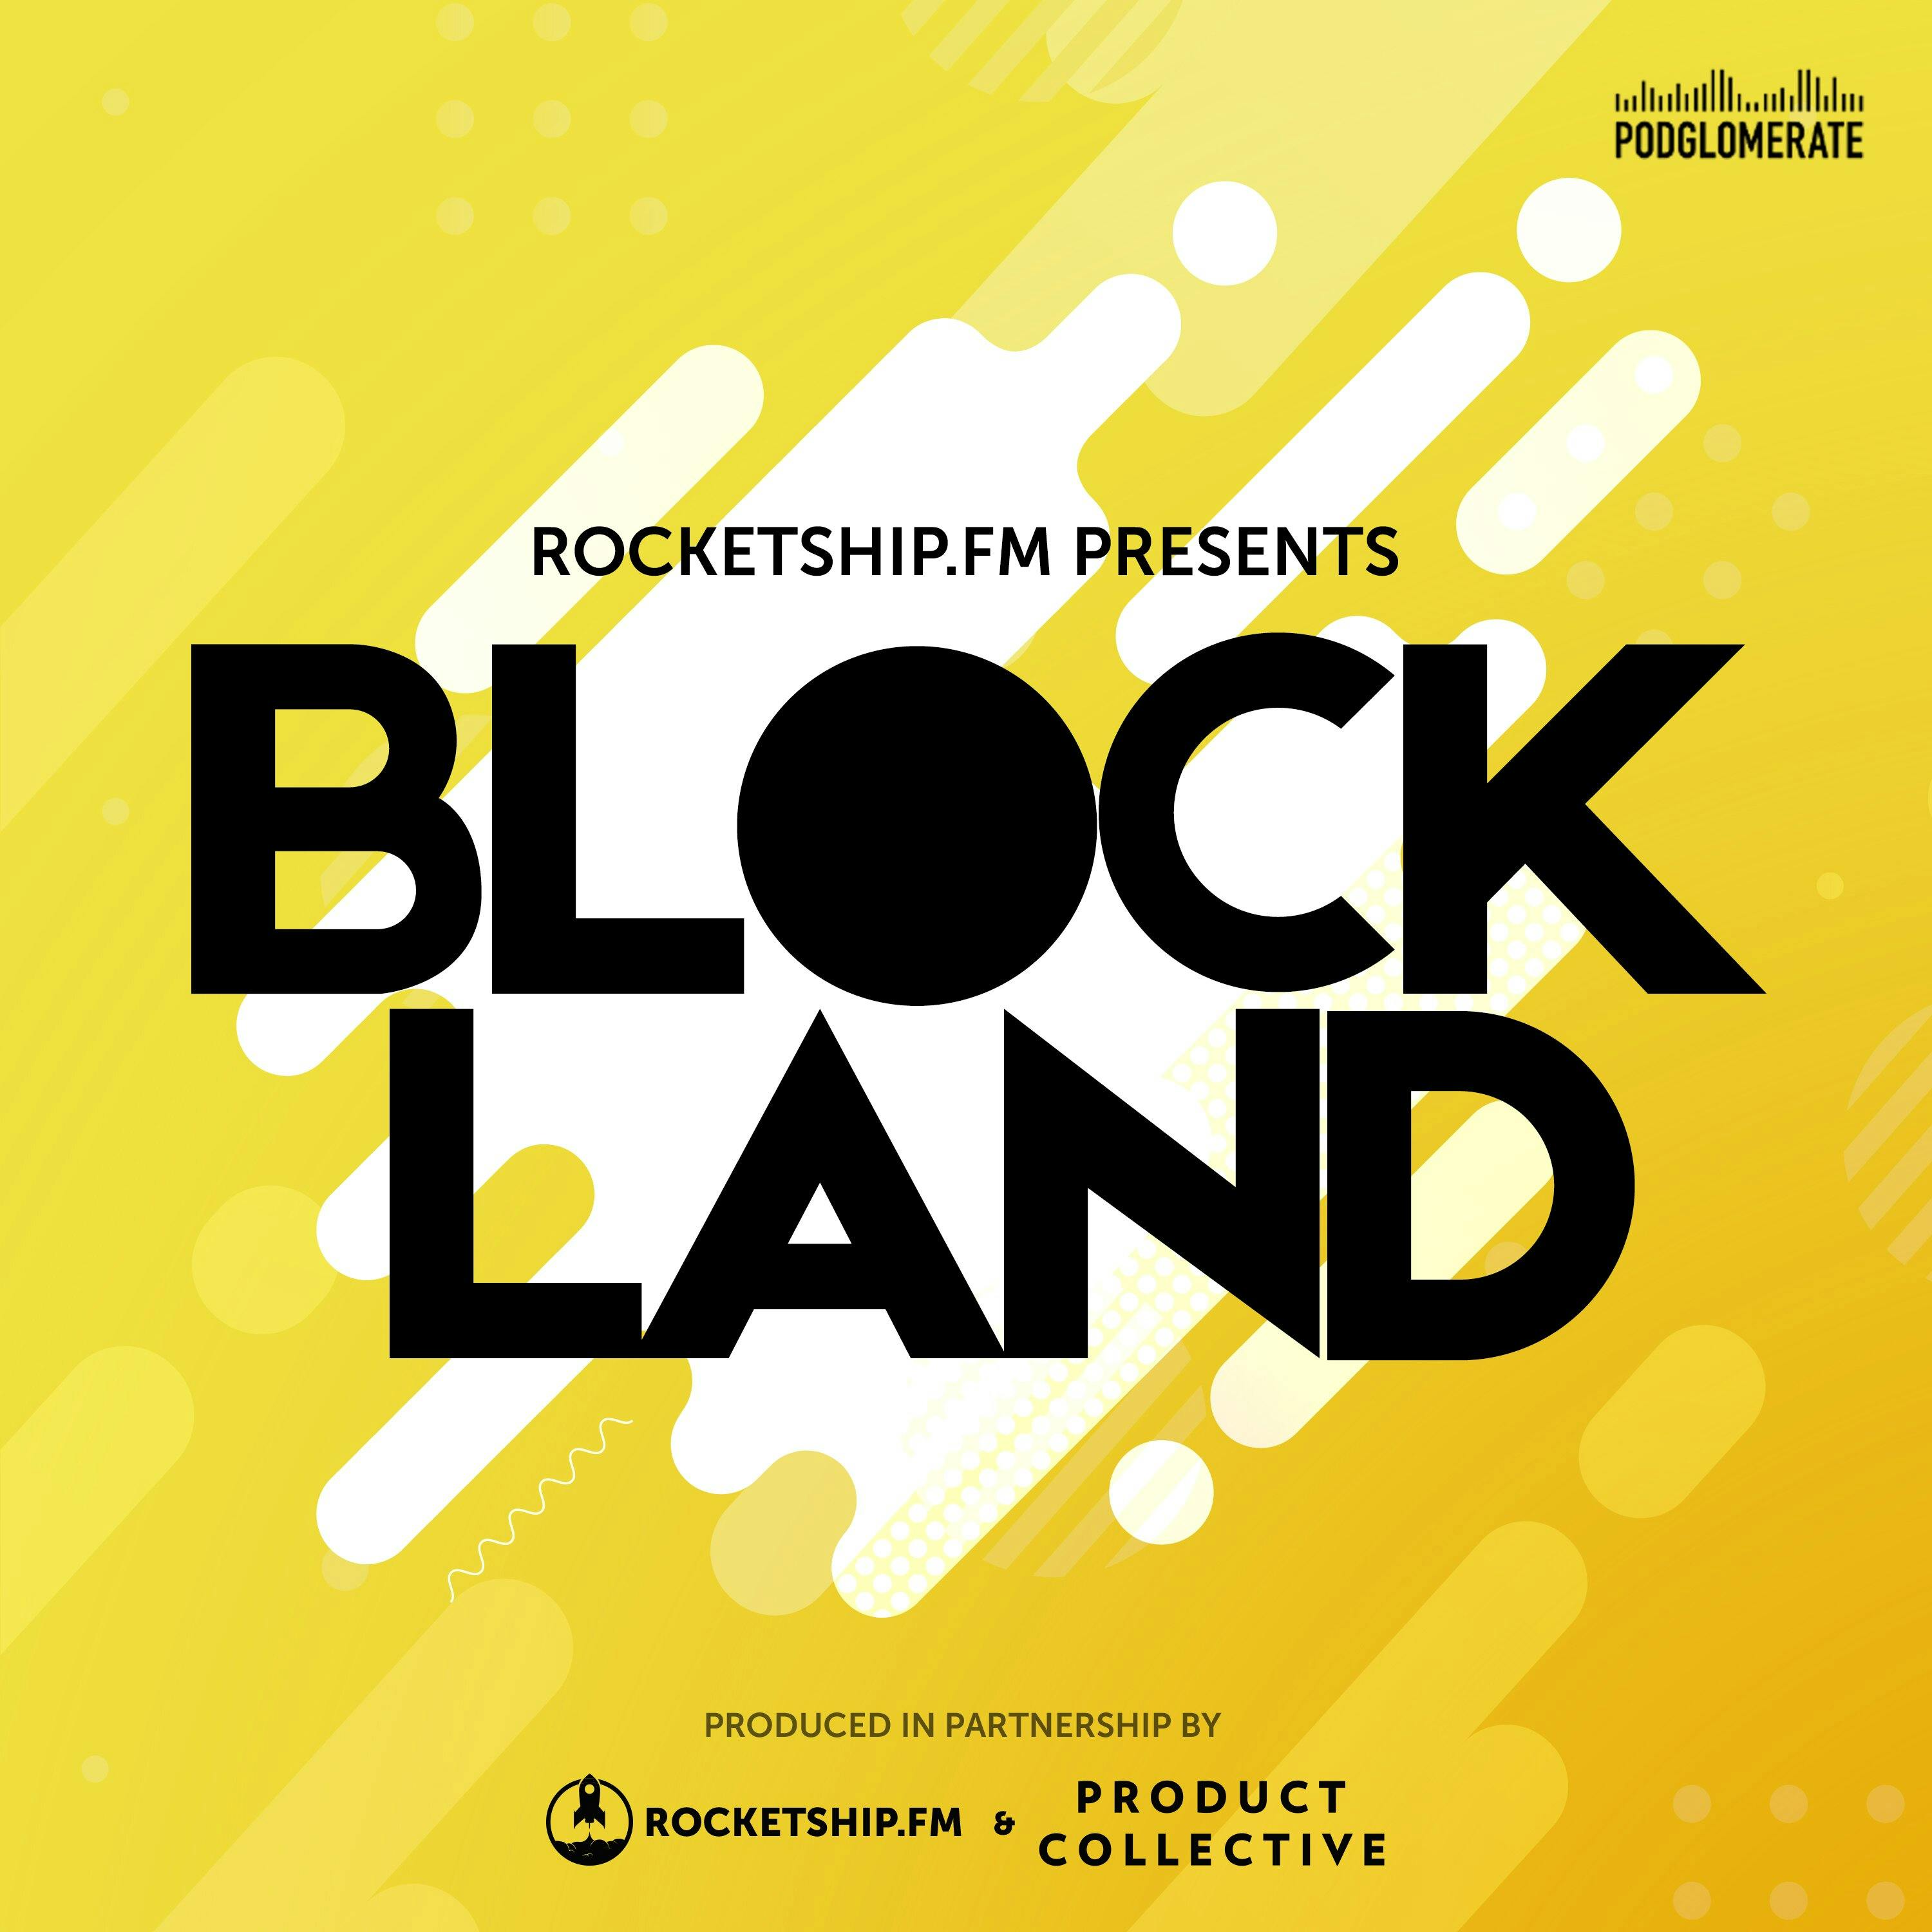 Blockland: A Brief History of Blockchain